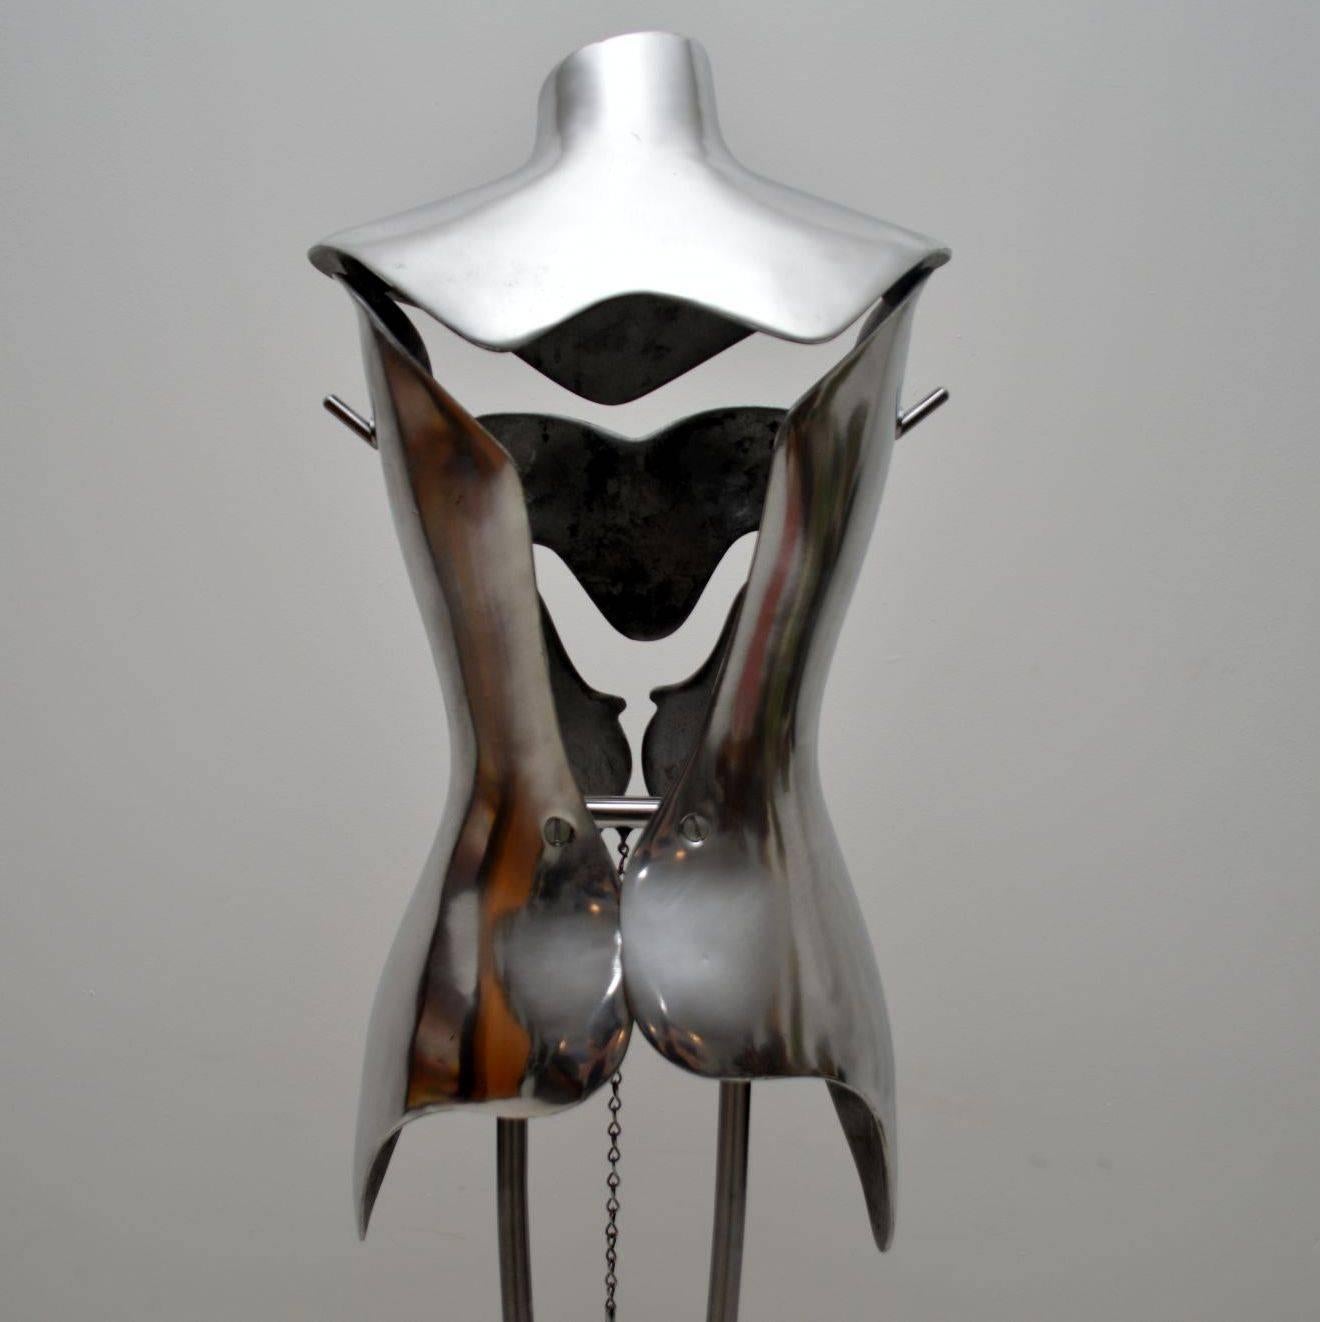 English Aluminium and Steel Mannequin Designed by Nigel Coates